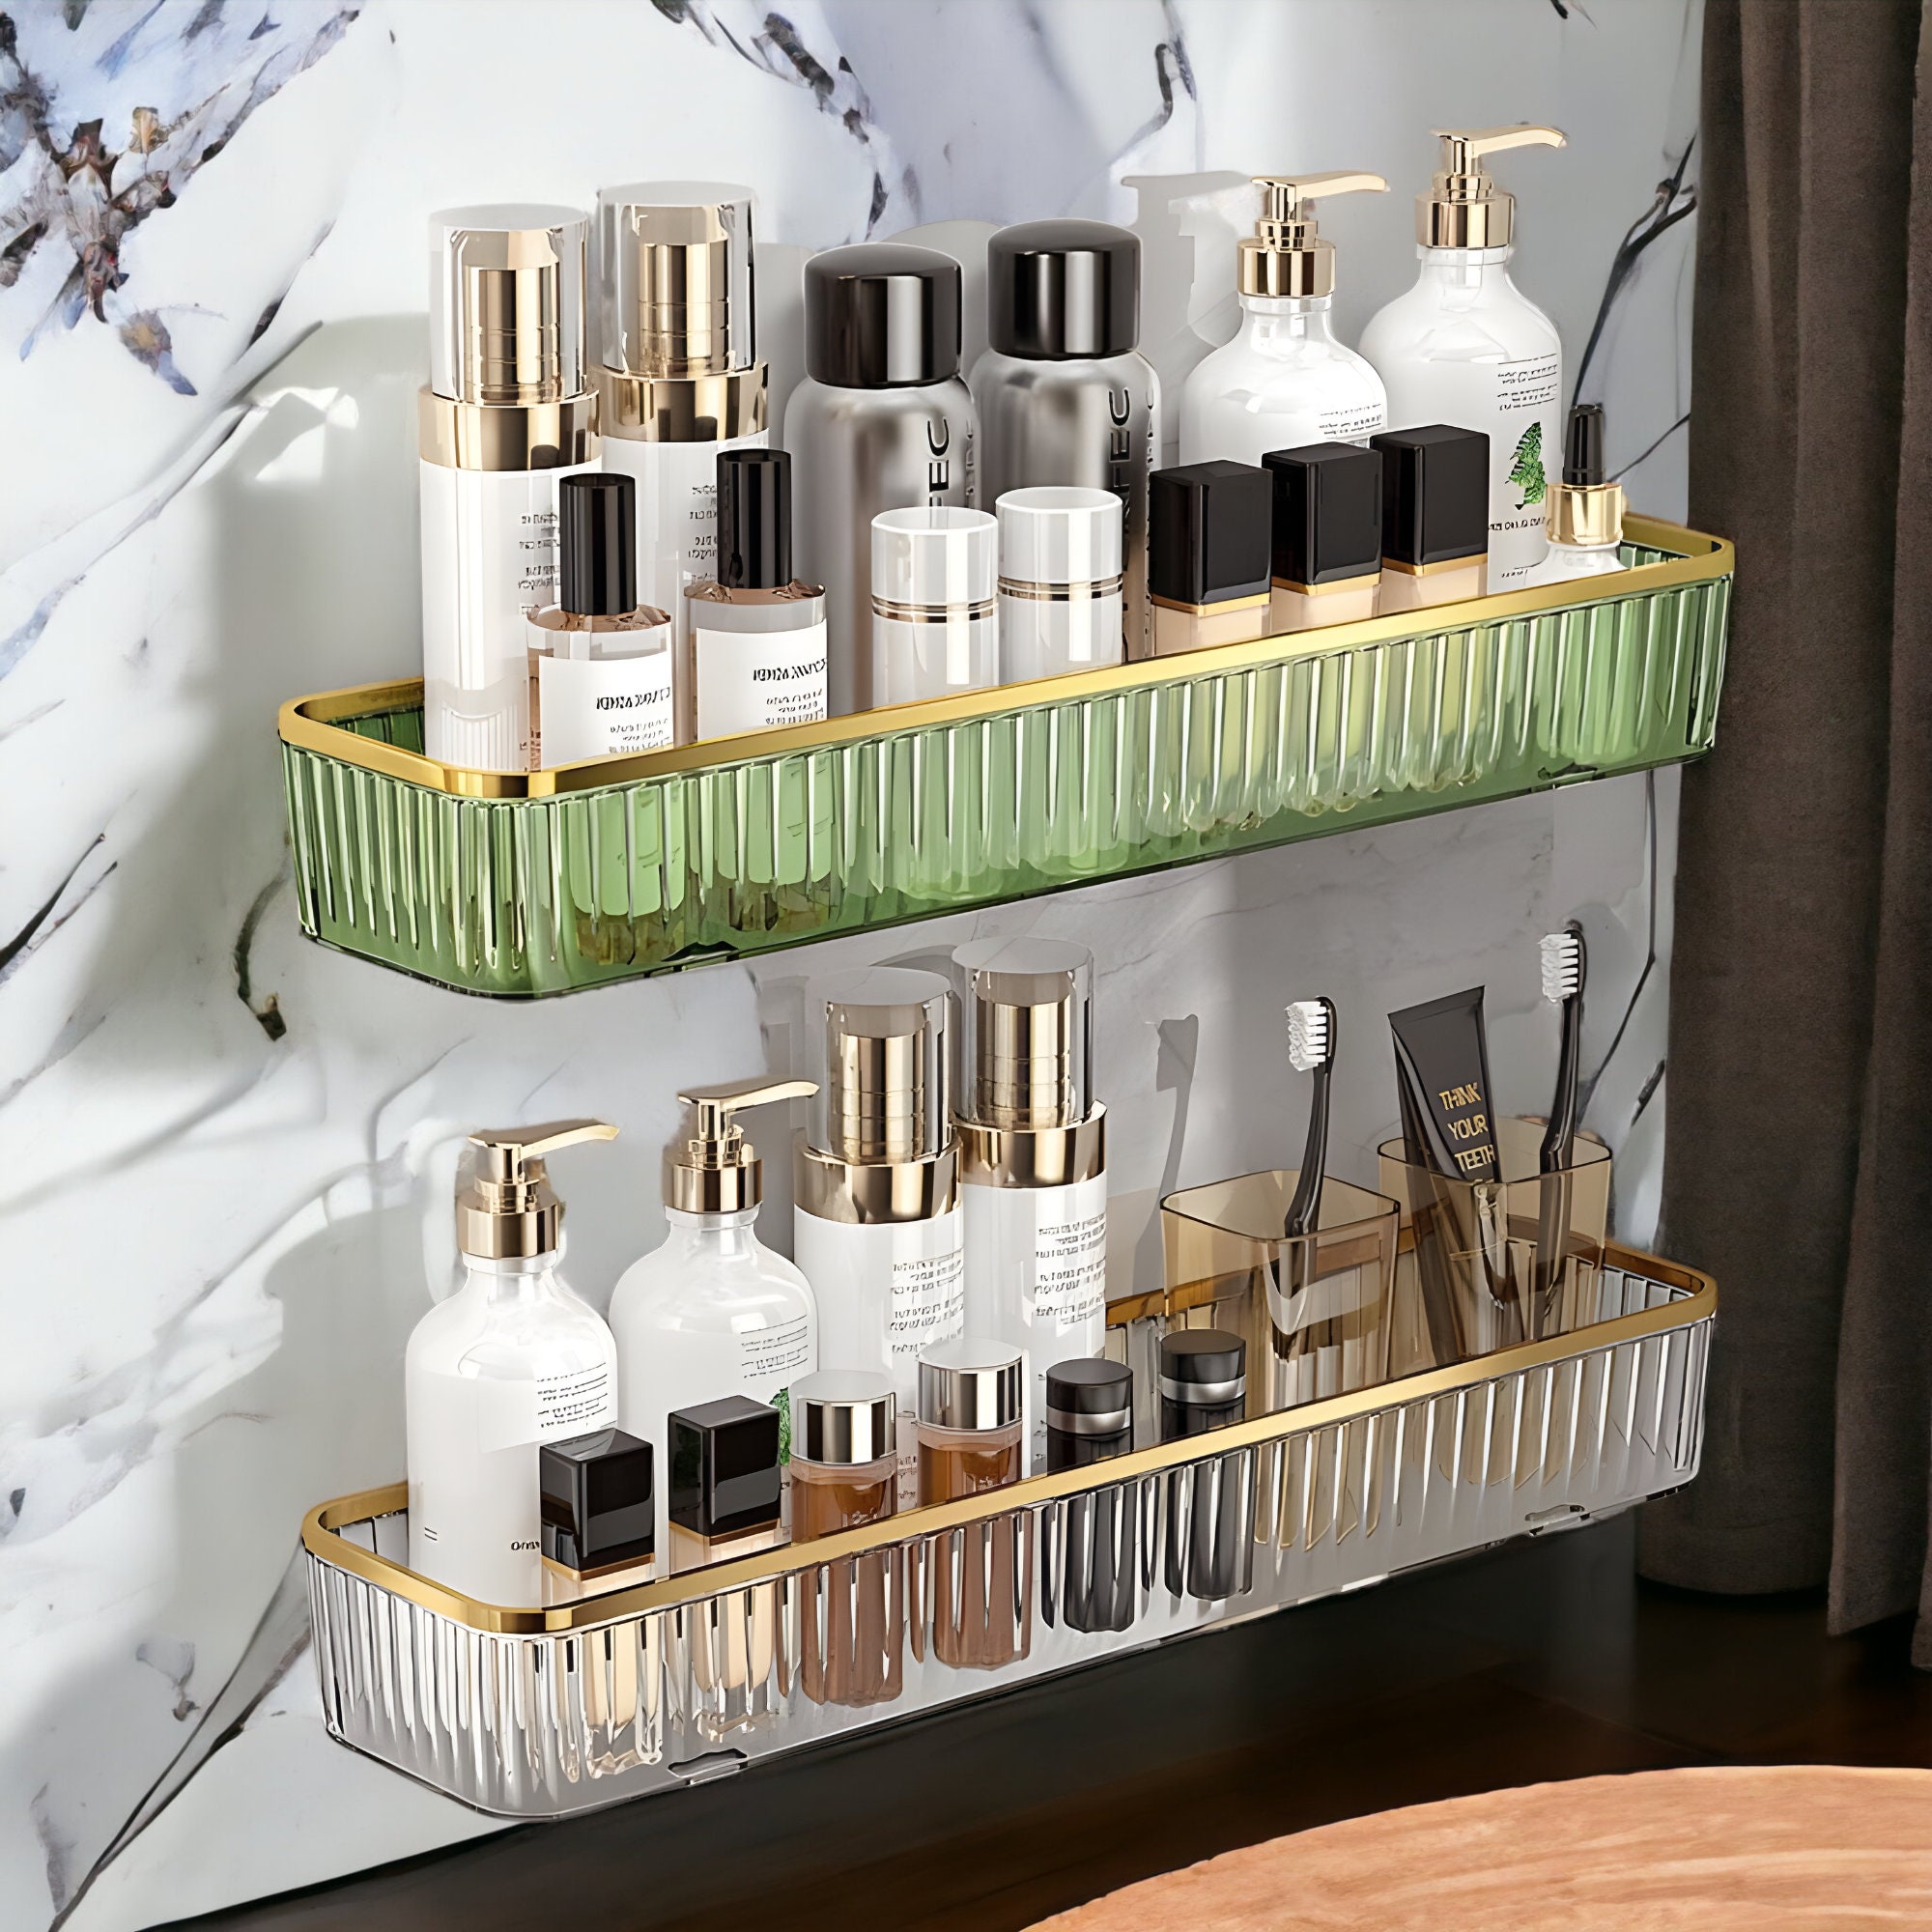 Cq acrylic Bathroom Shower Shelf Organizer Rack,Adhesive Shower